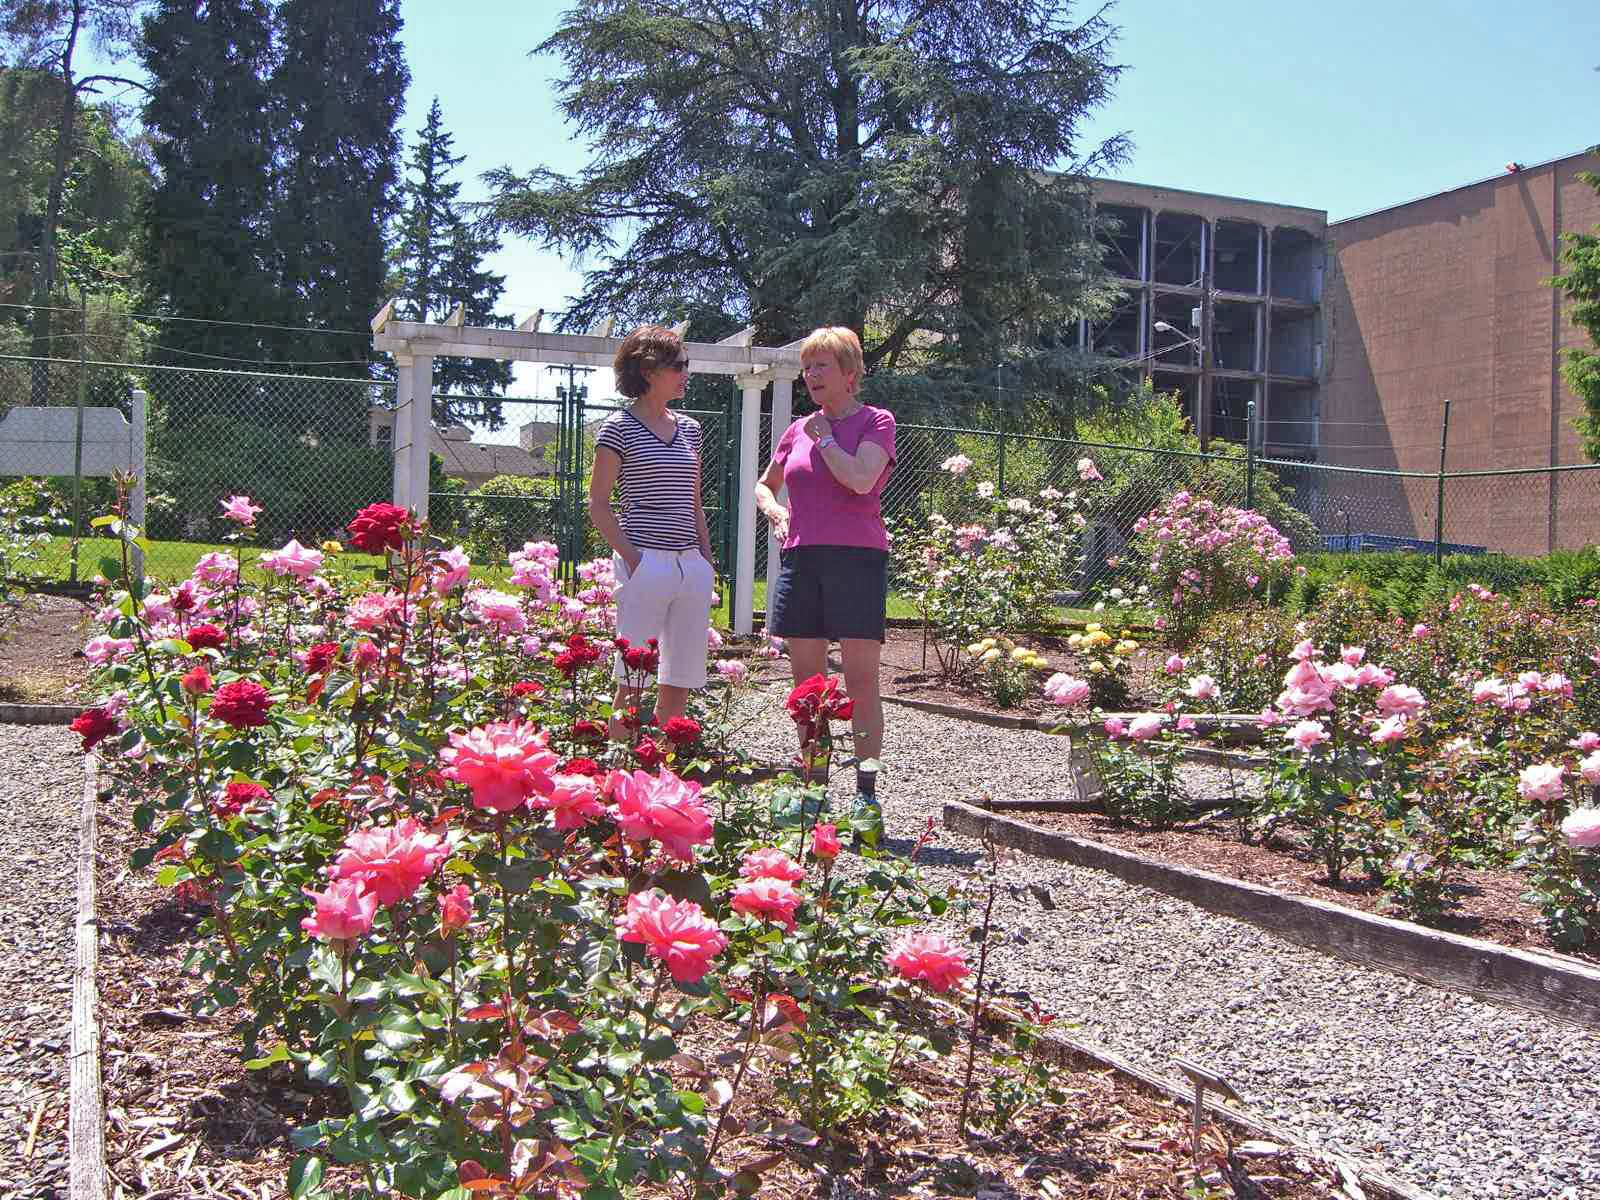 Visitors enjoy a sunny summer day in the Centennial Rose Garden.